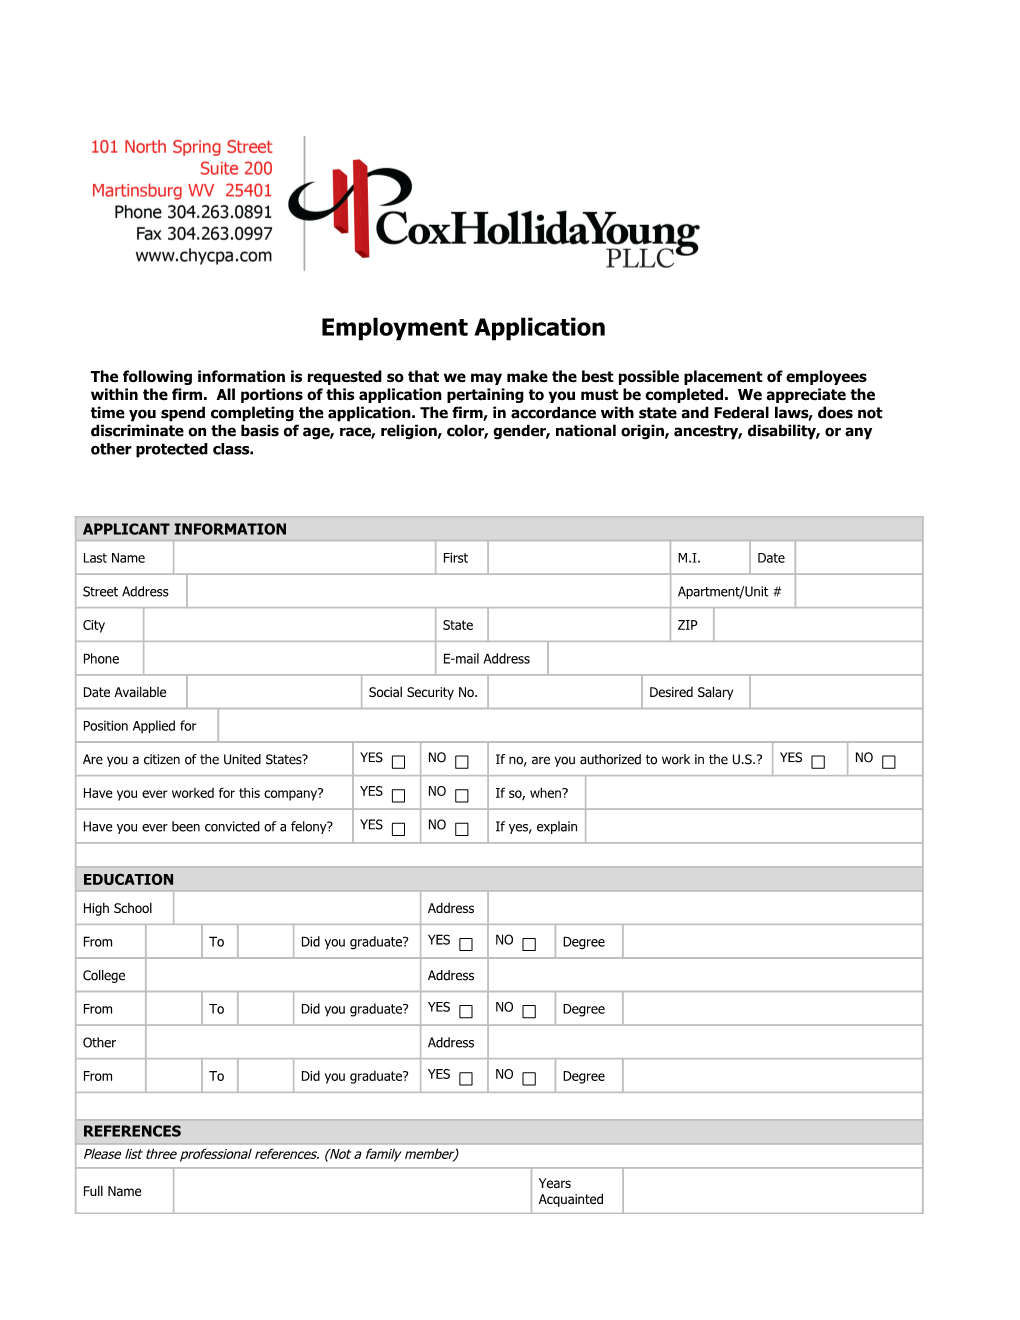 Employment Application (2-Pp.) s14